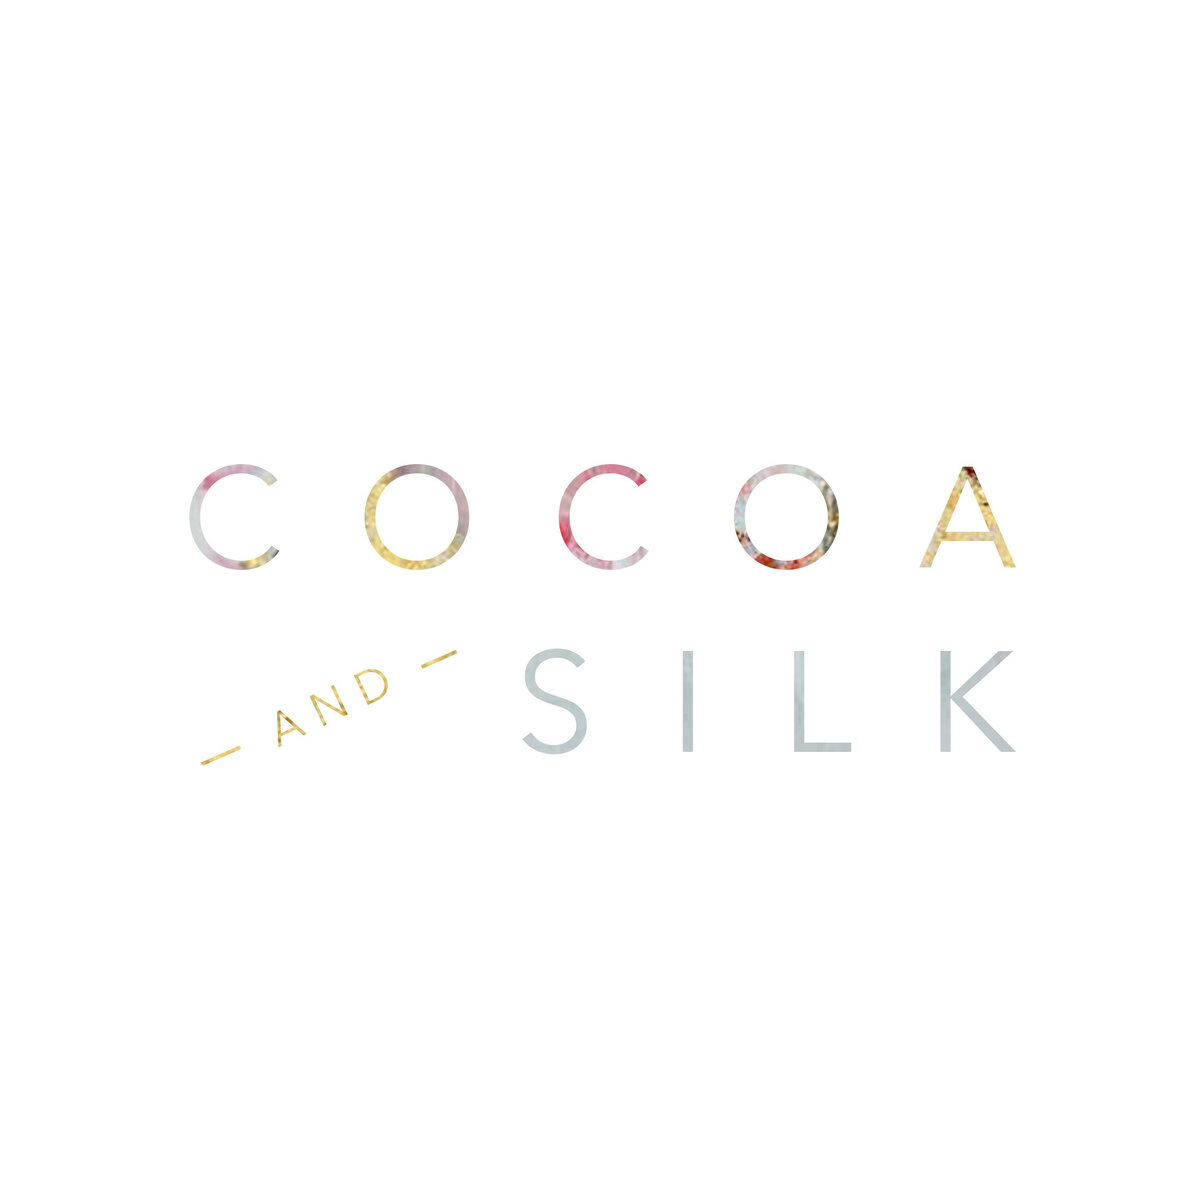 CocoaAndSilk_Square_Logo1_HR